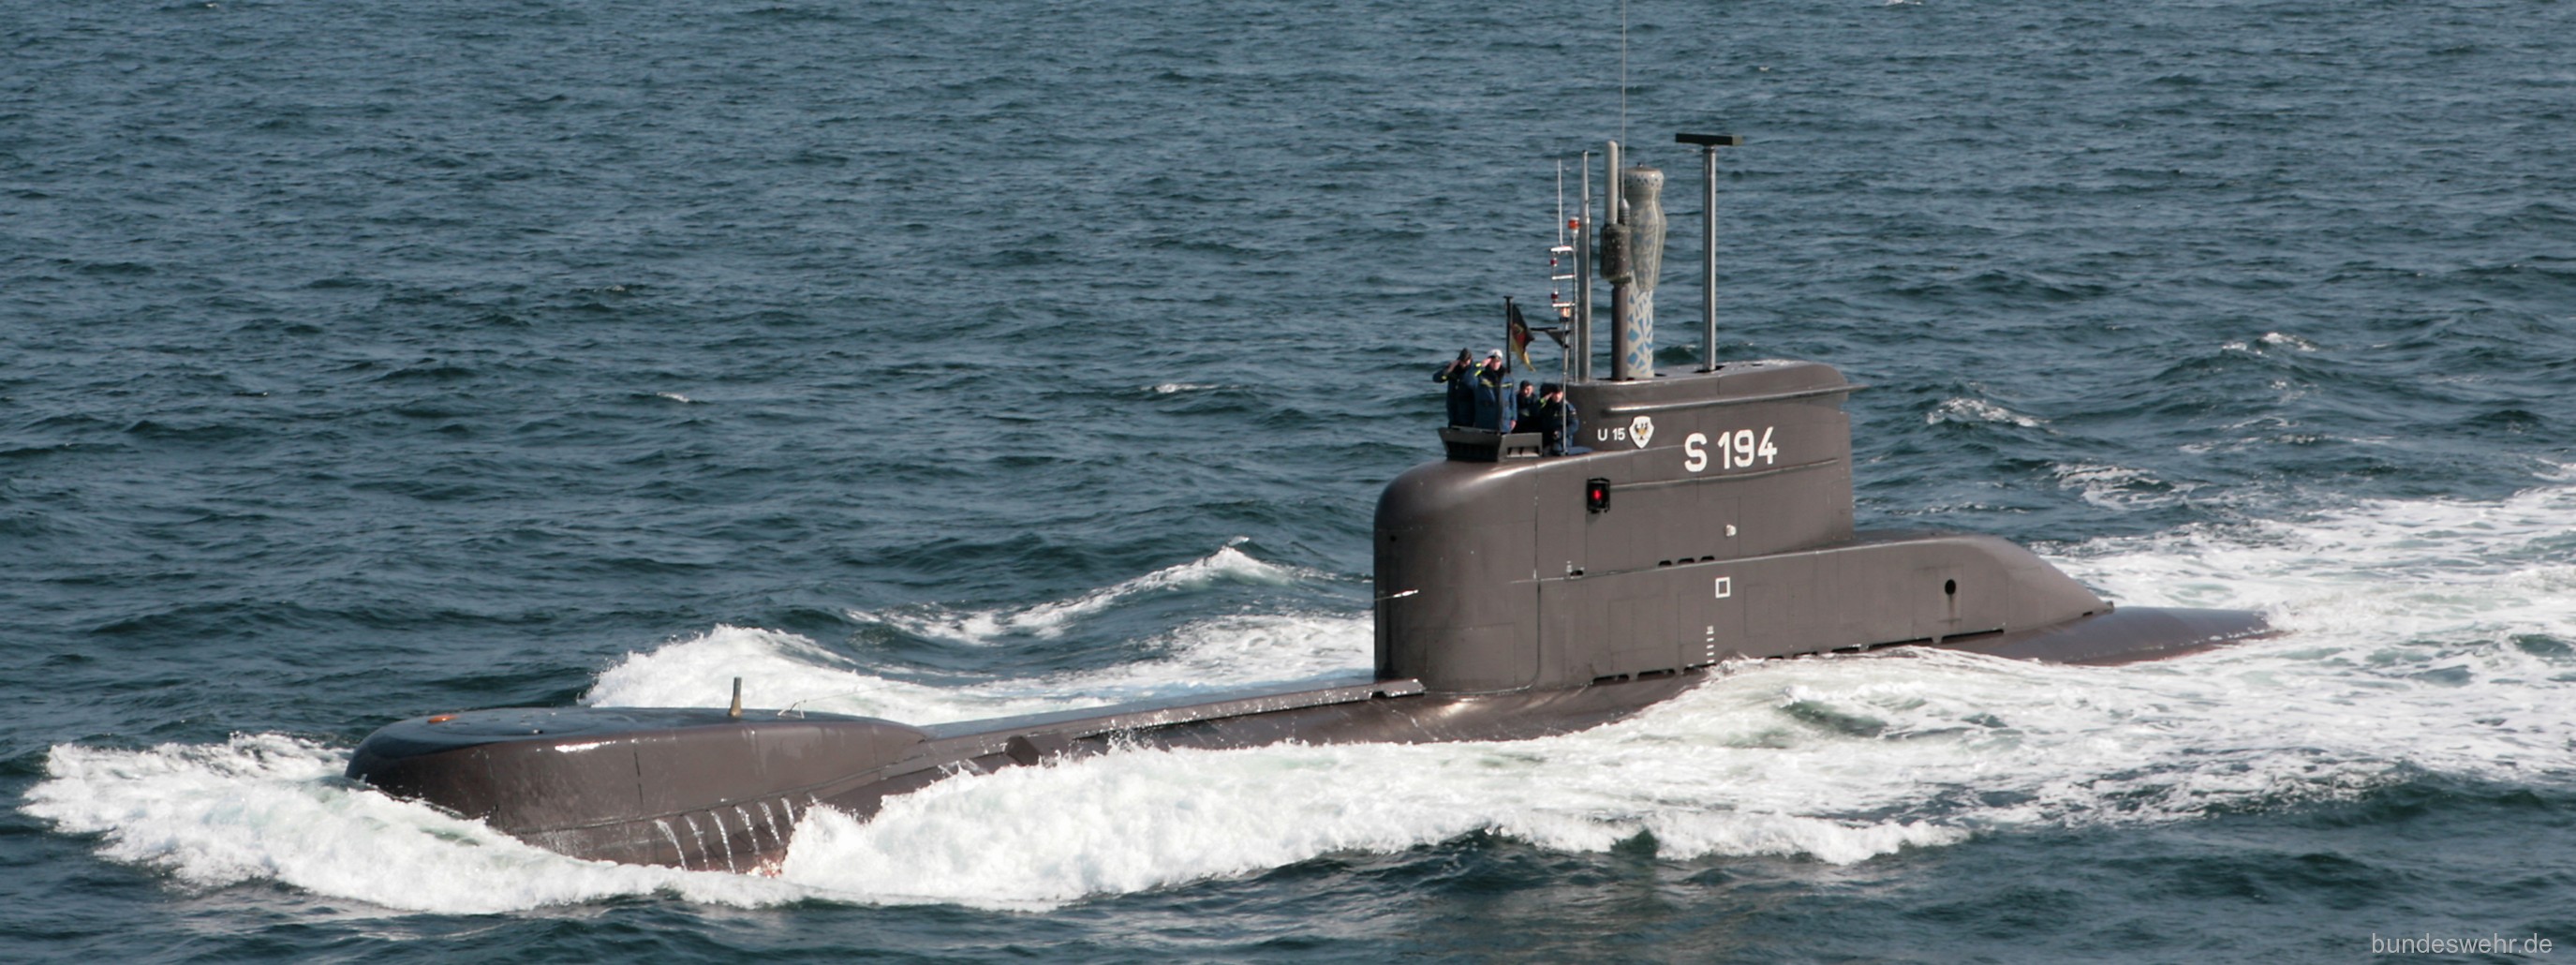 s-194 fgs u15 type 206 class submarine german navy 07